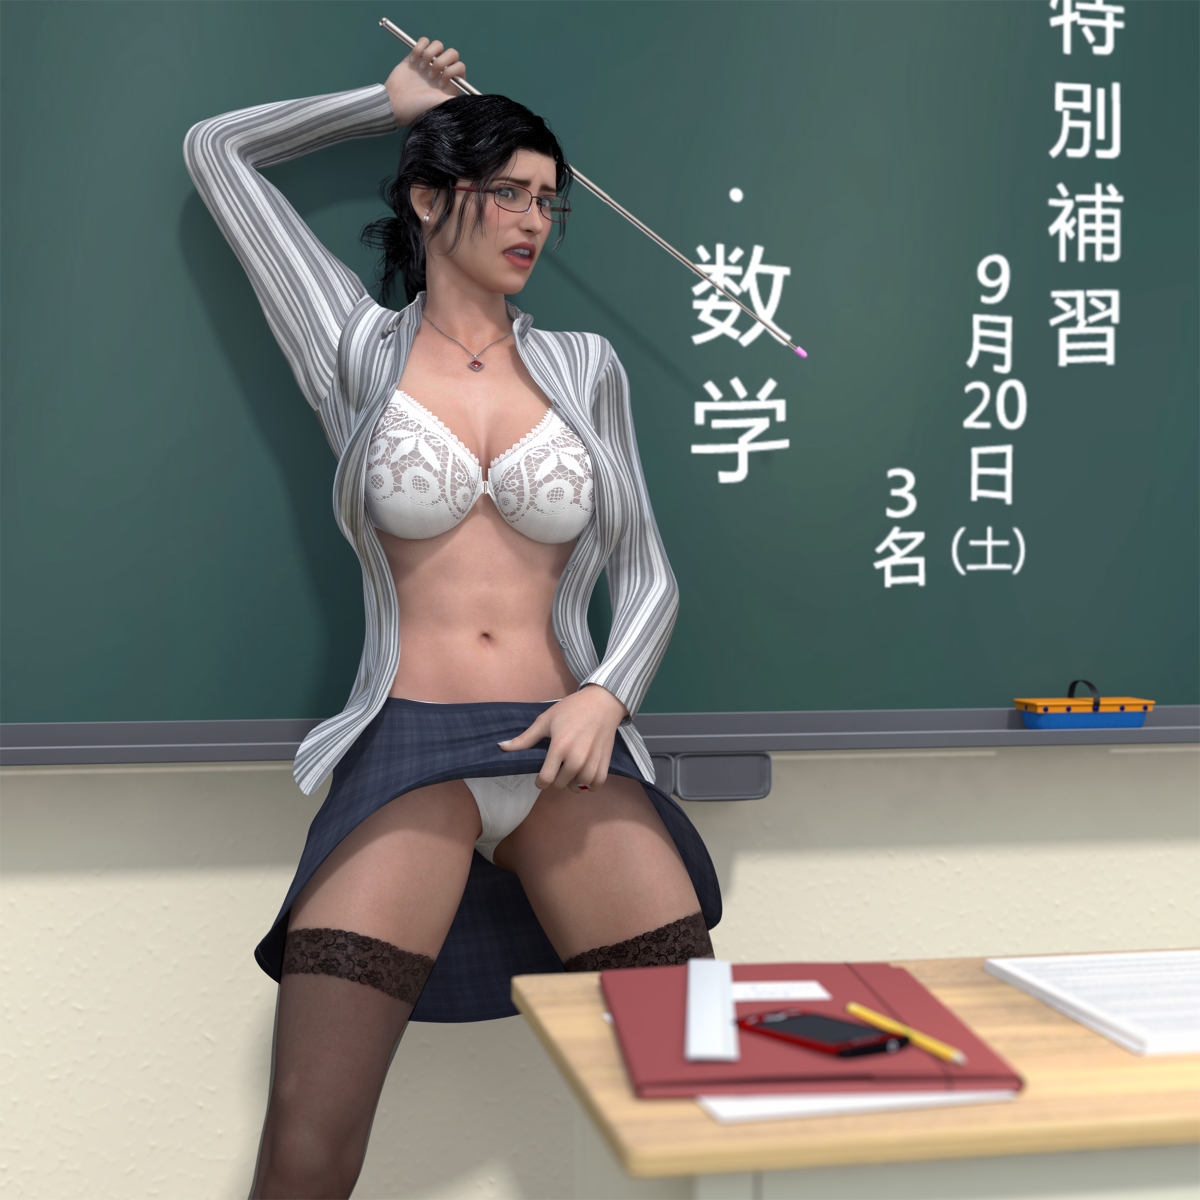 Cartoon Teacher Stockings - Hiromi Female Teacher 1 - Porn Cartoon Comics